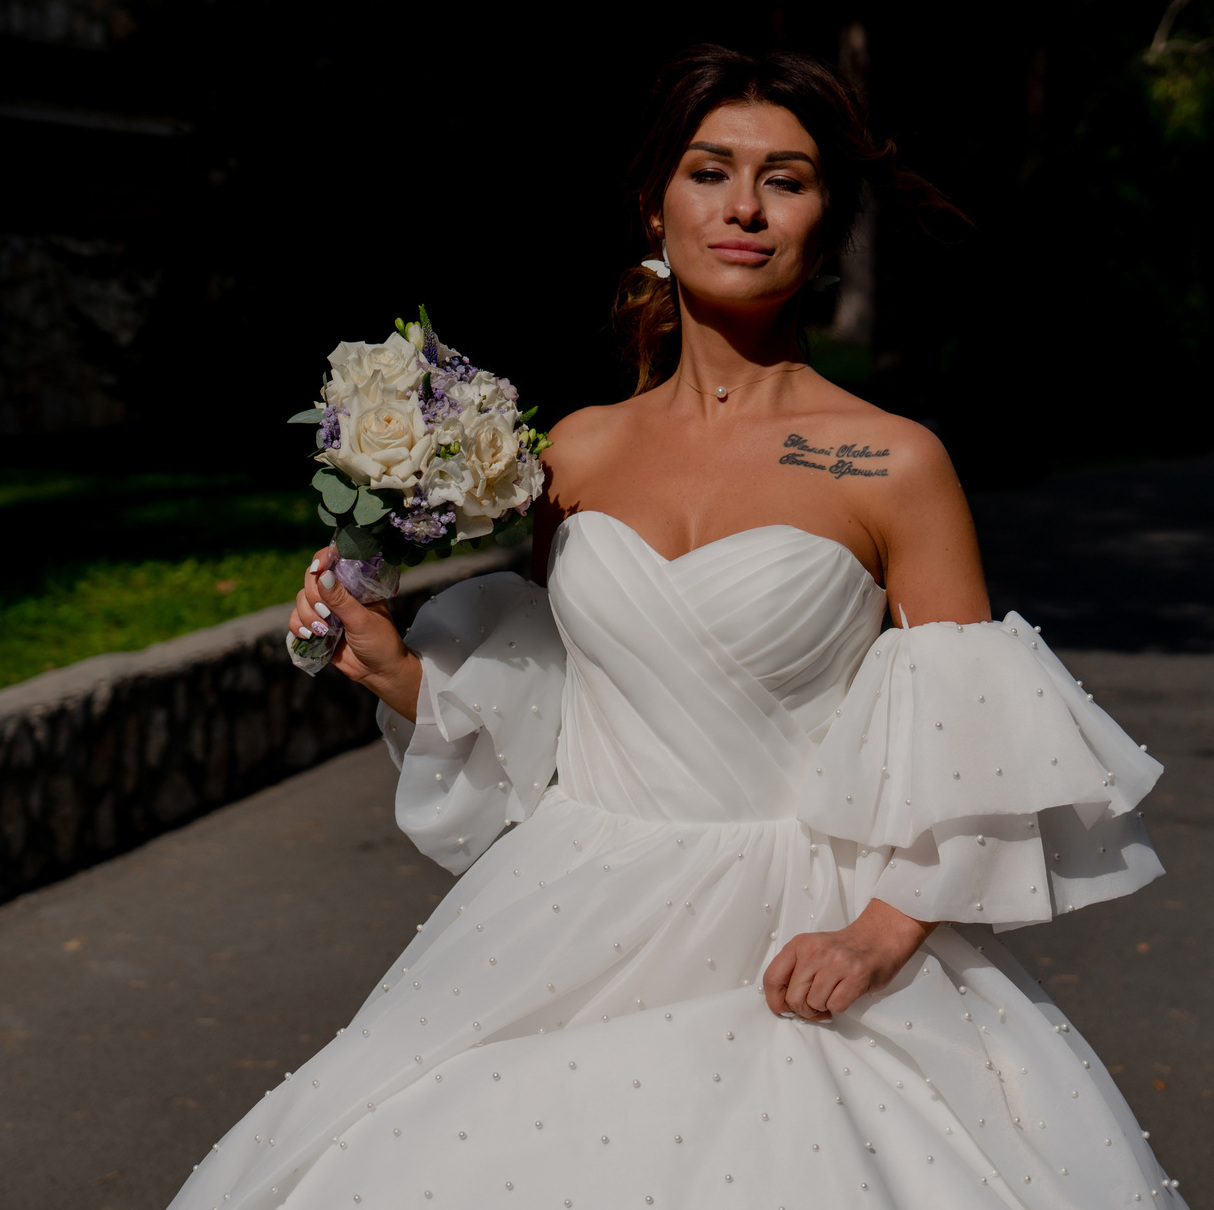 wedding photo, beauty, white dress, portrait, daisy,